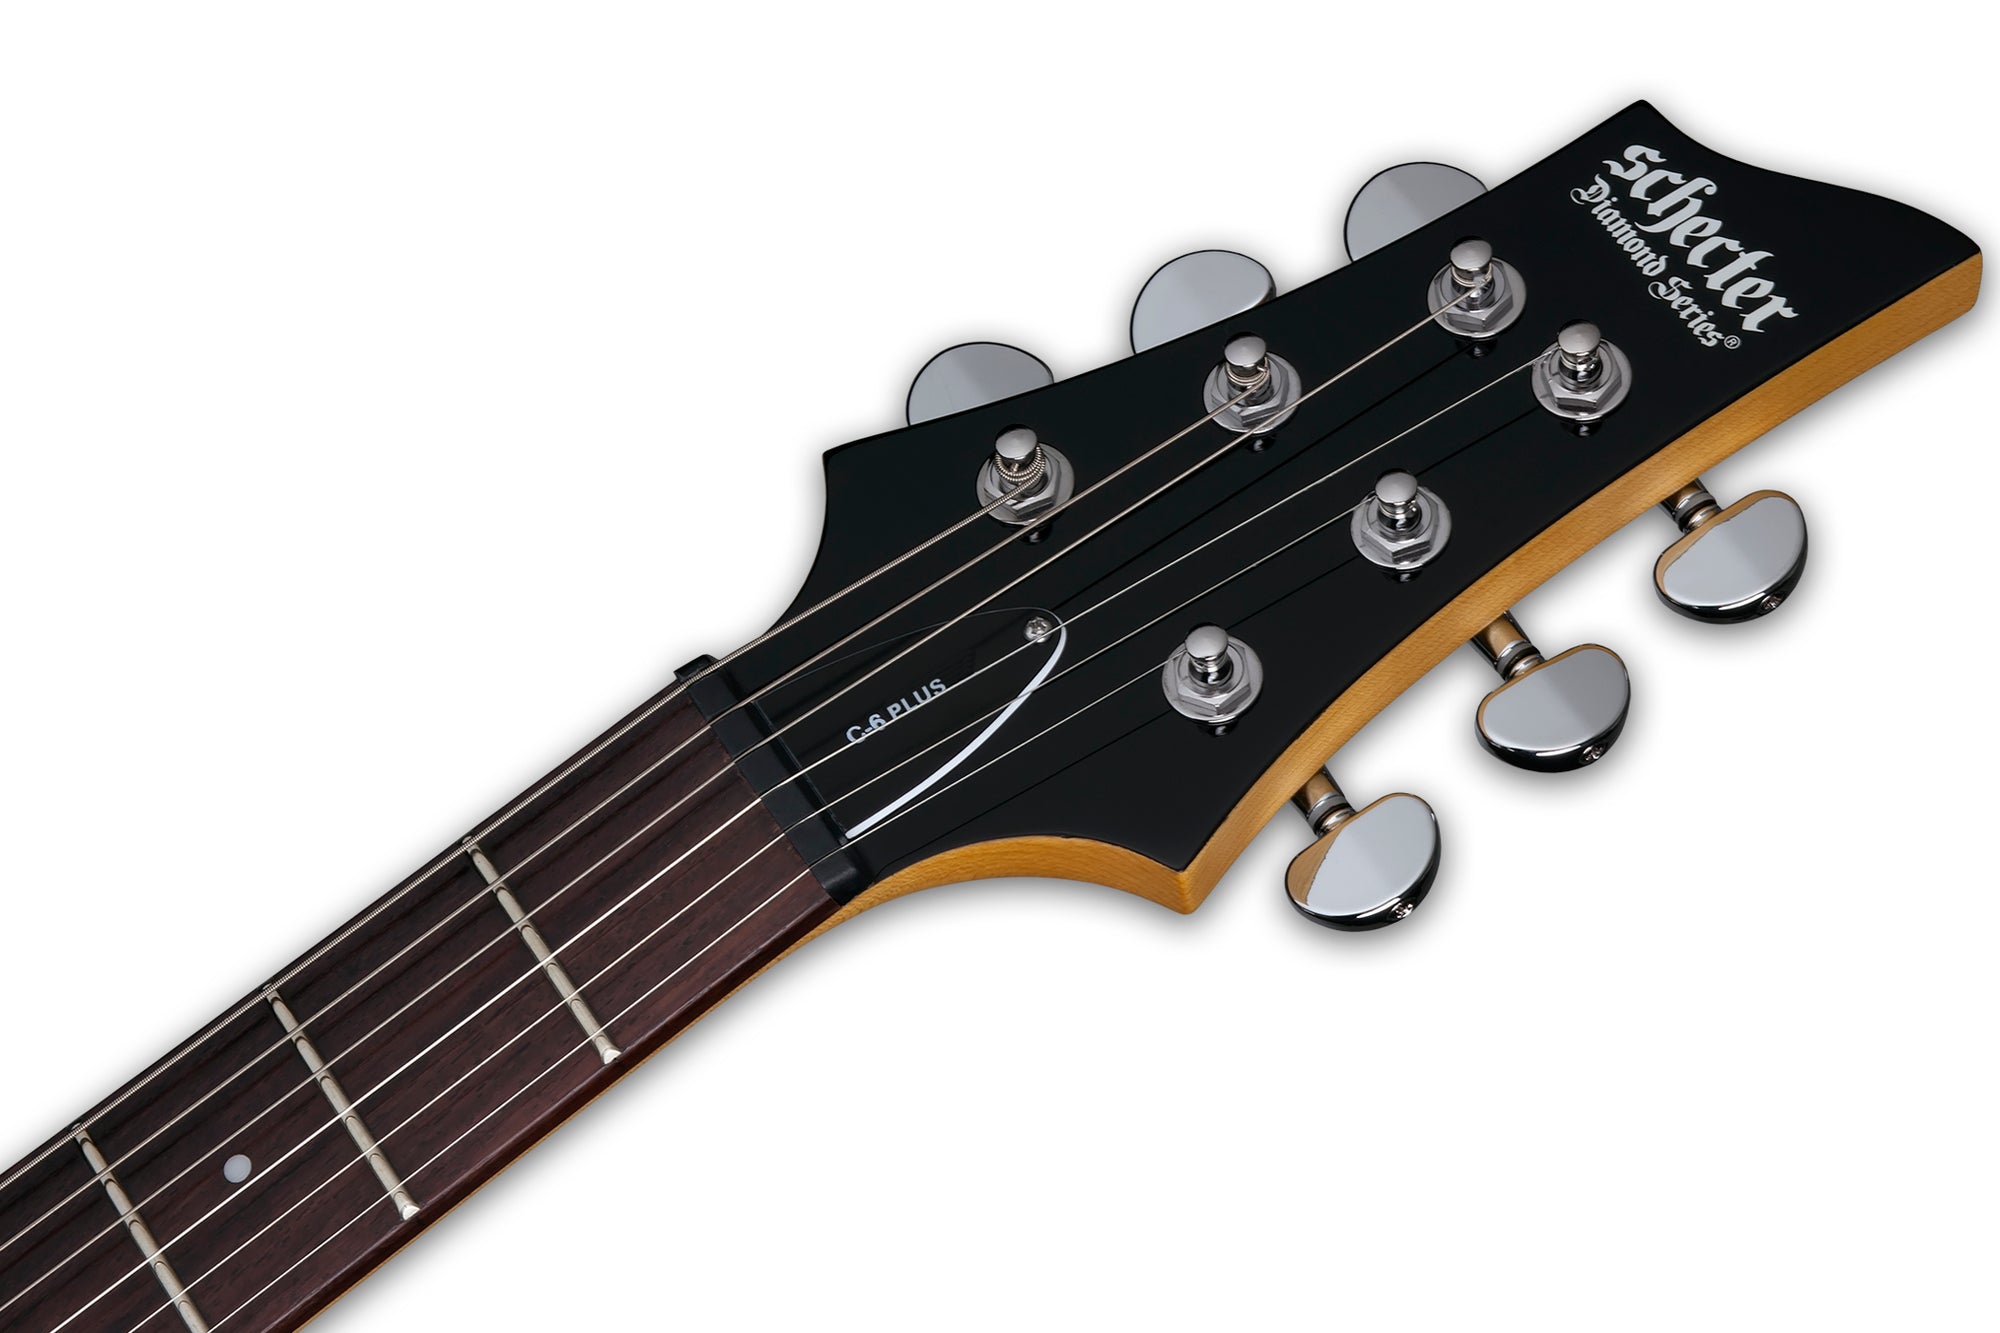 Schecter C-6 Plus 6 String Electric Guitar - Electric Magenta 445-SHC - The Guitar World